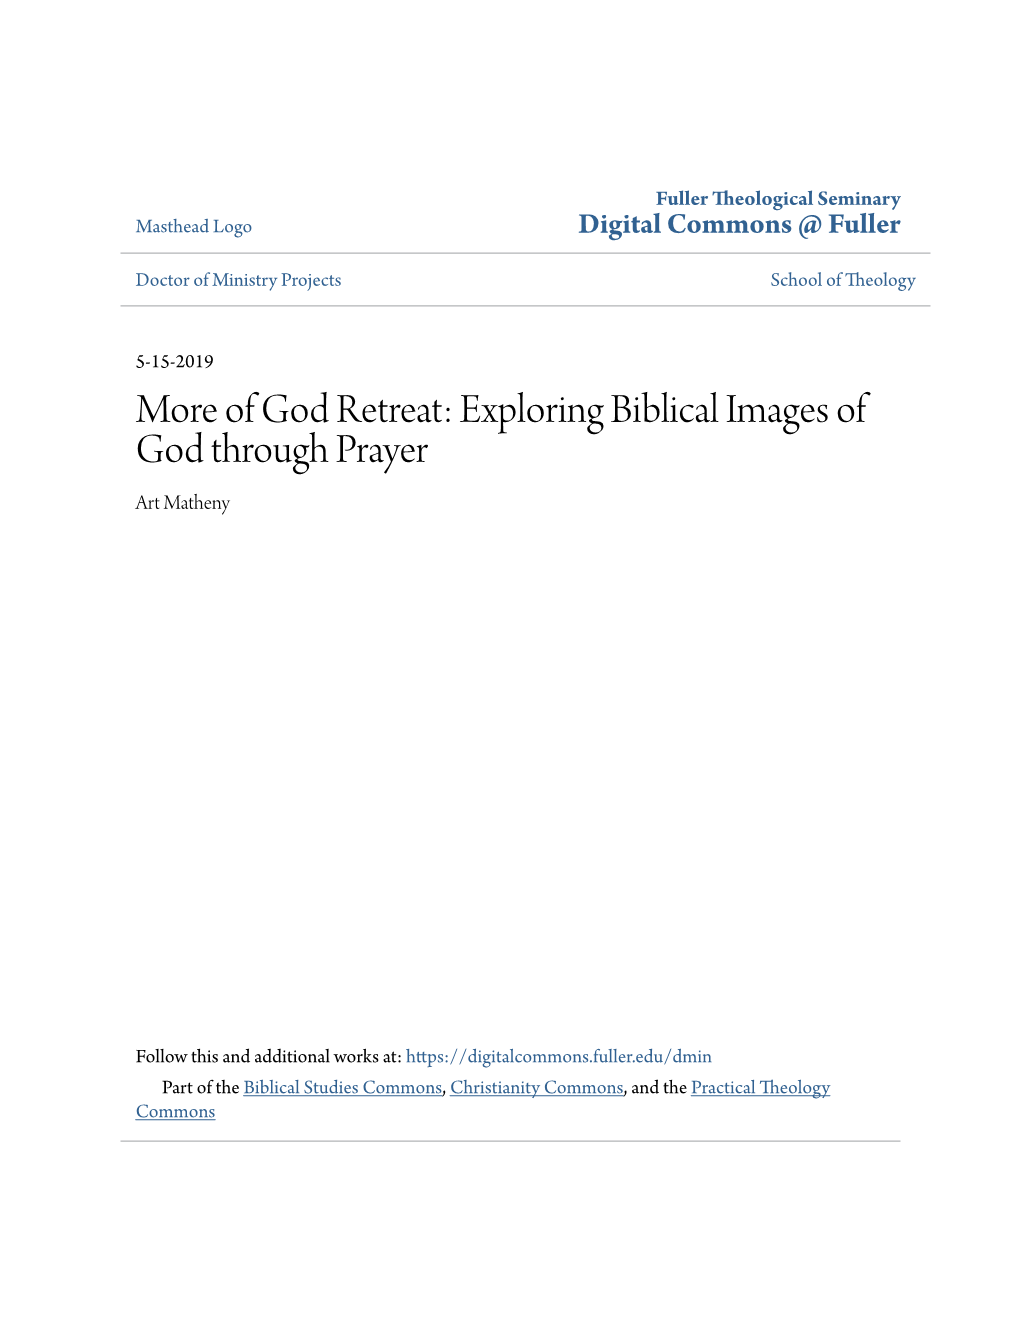 Of God Retreat: Exploring Biblical Images of God Through Prayer Art Matheny